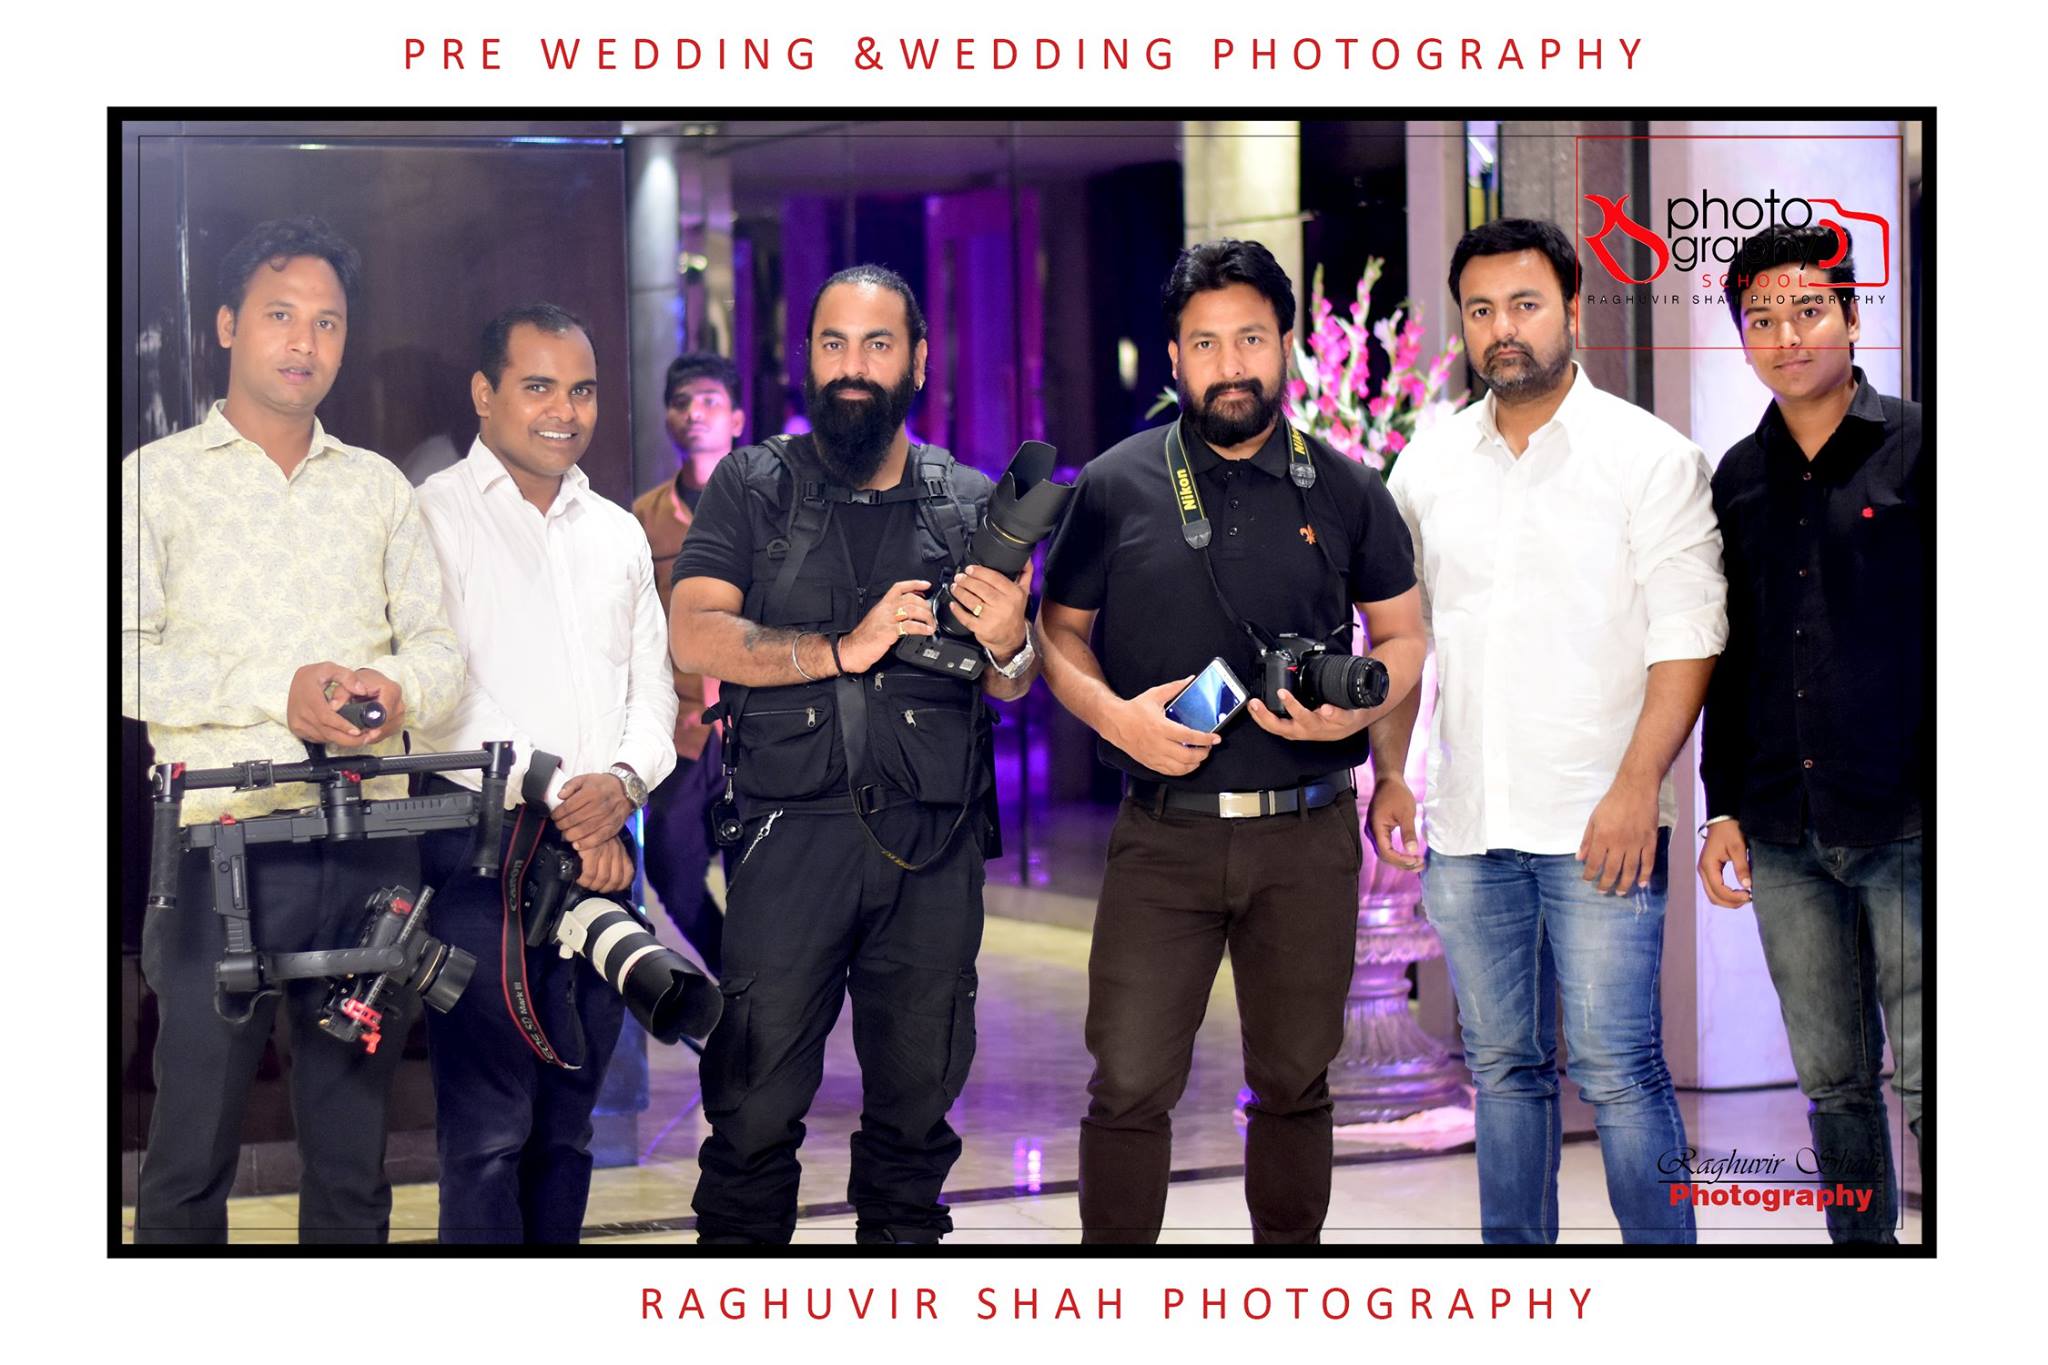 Wedding photographers in delhiMatrimonialWedding PhotographersWest DelhiPitampura